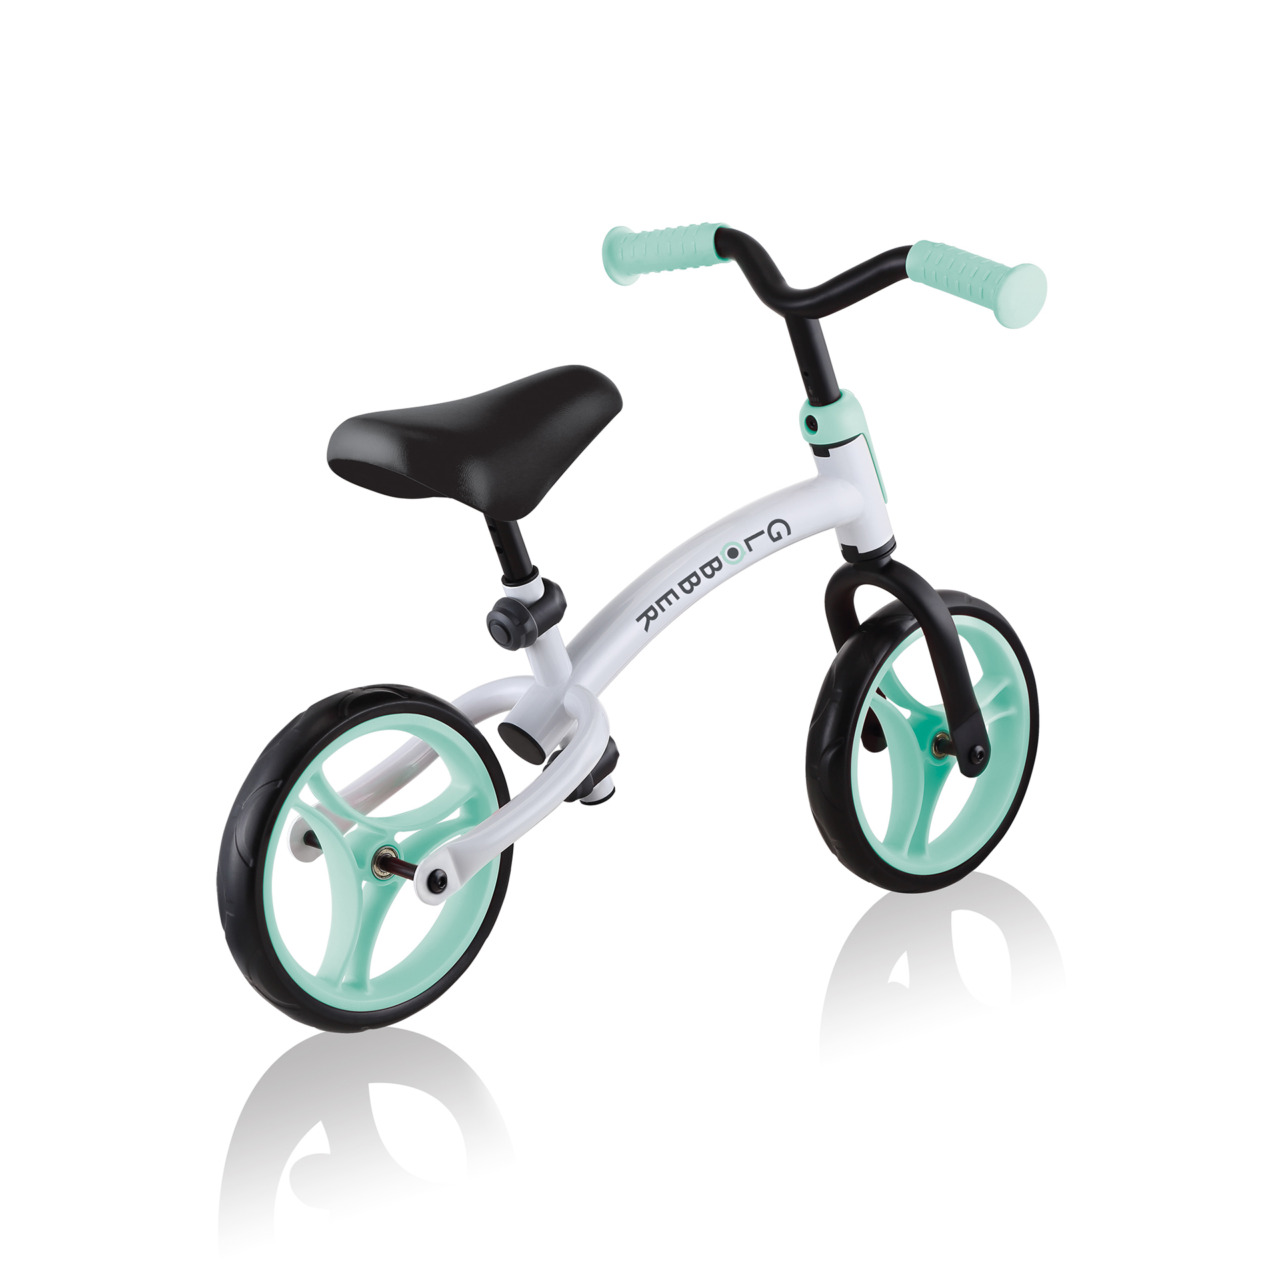 614 206 2 Adjustable Mint Balance Bike For Toddlers